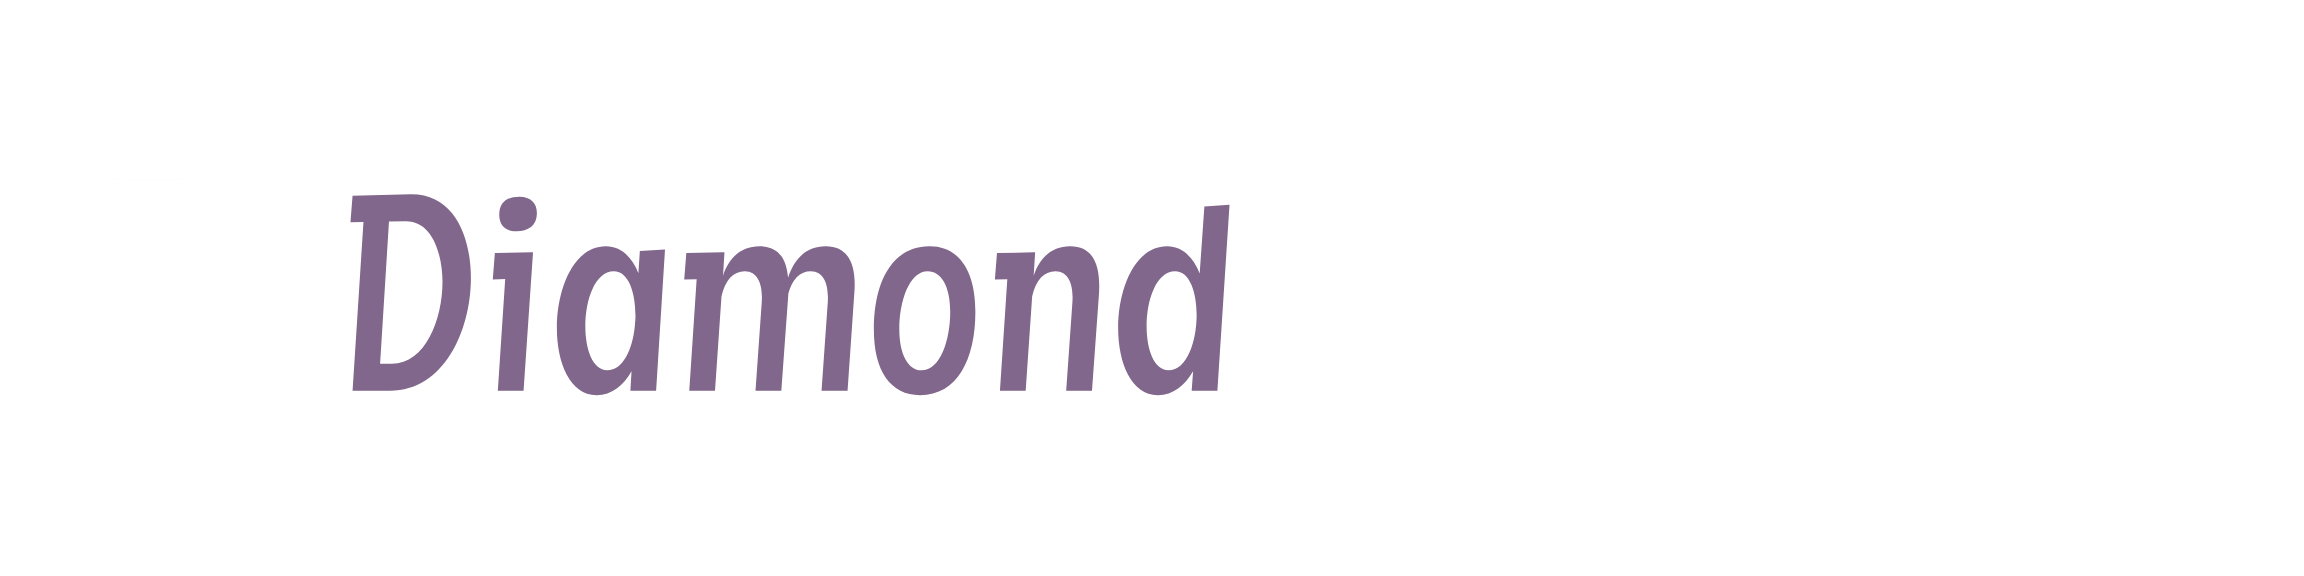 dimondcollection-reemsoft-logo